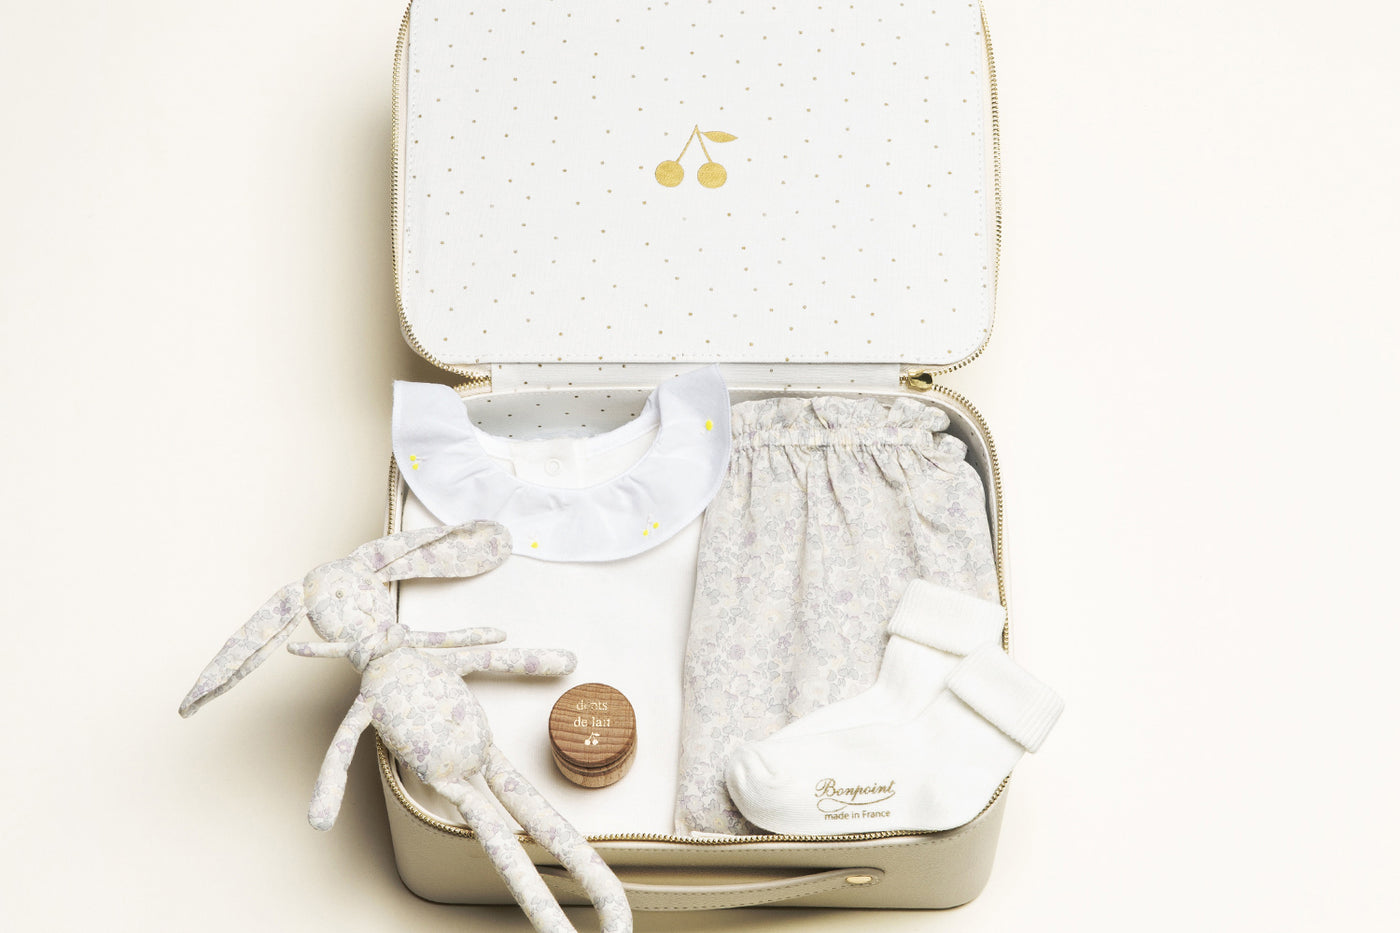 Medium birth suitcase for girls